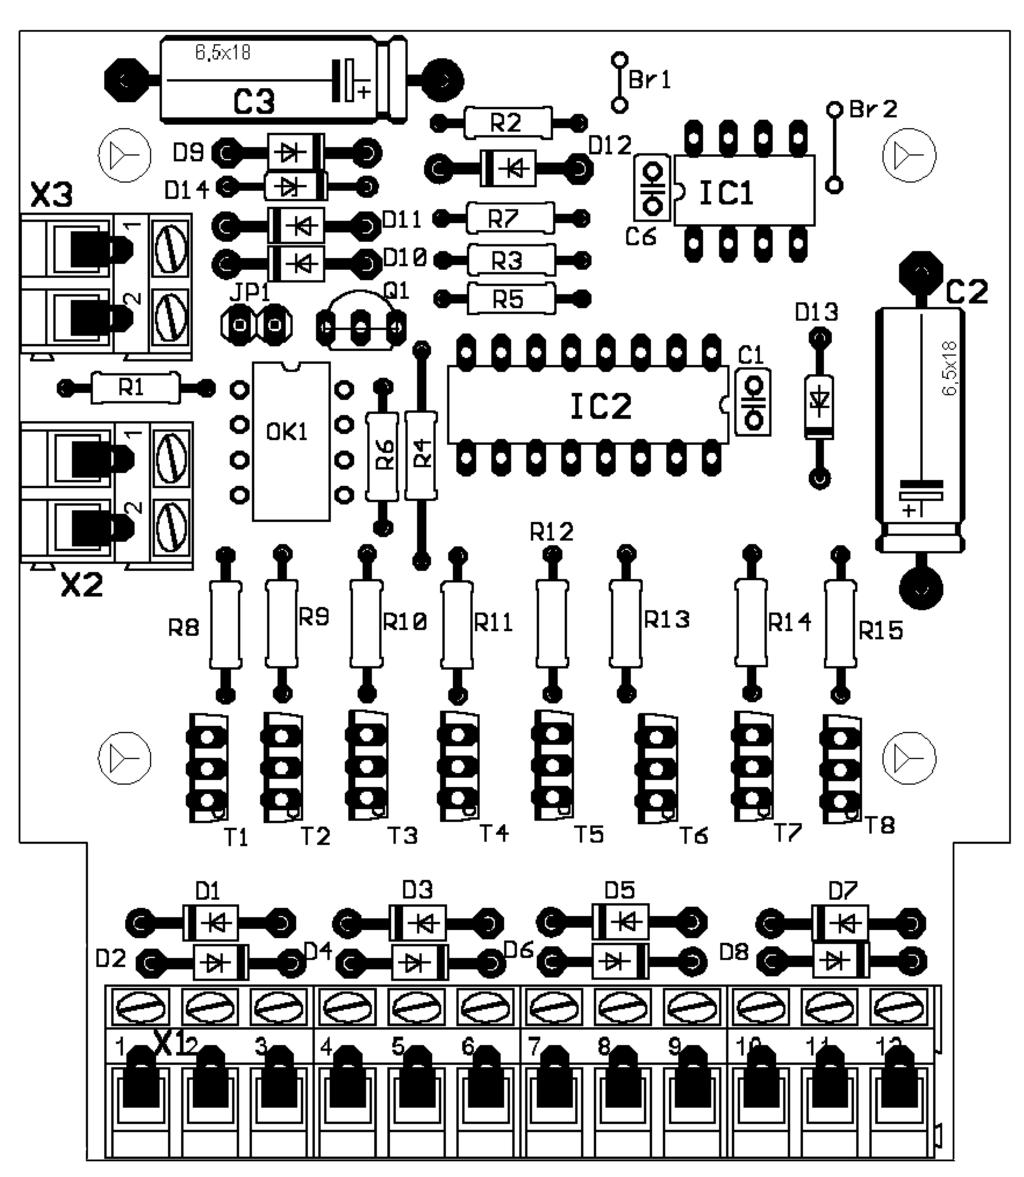 WD-5 WD-5: Bestückungsplan - PCB layout Plan d